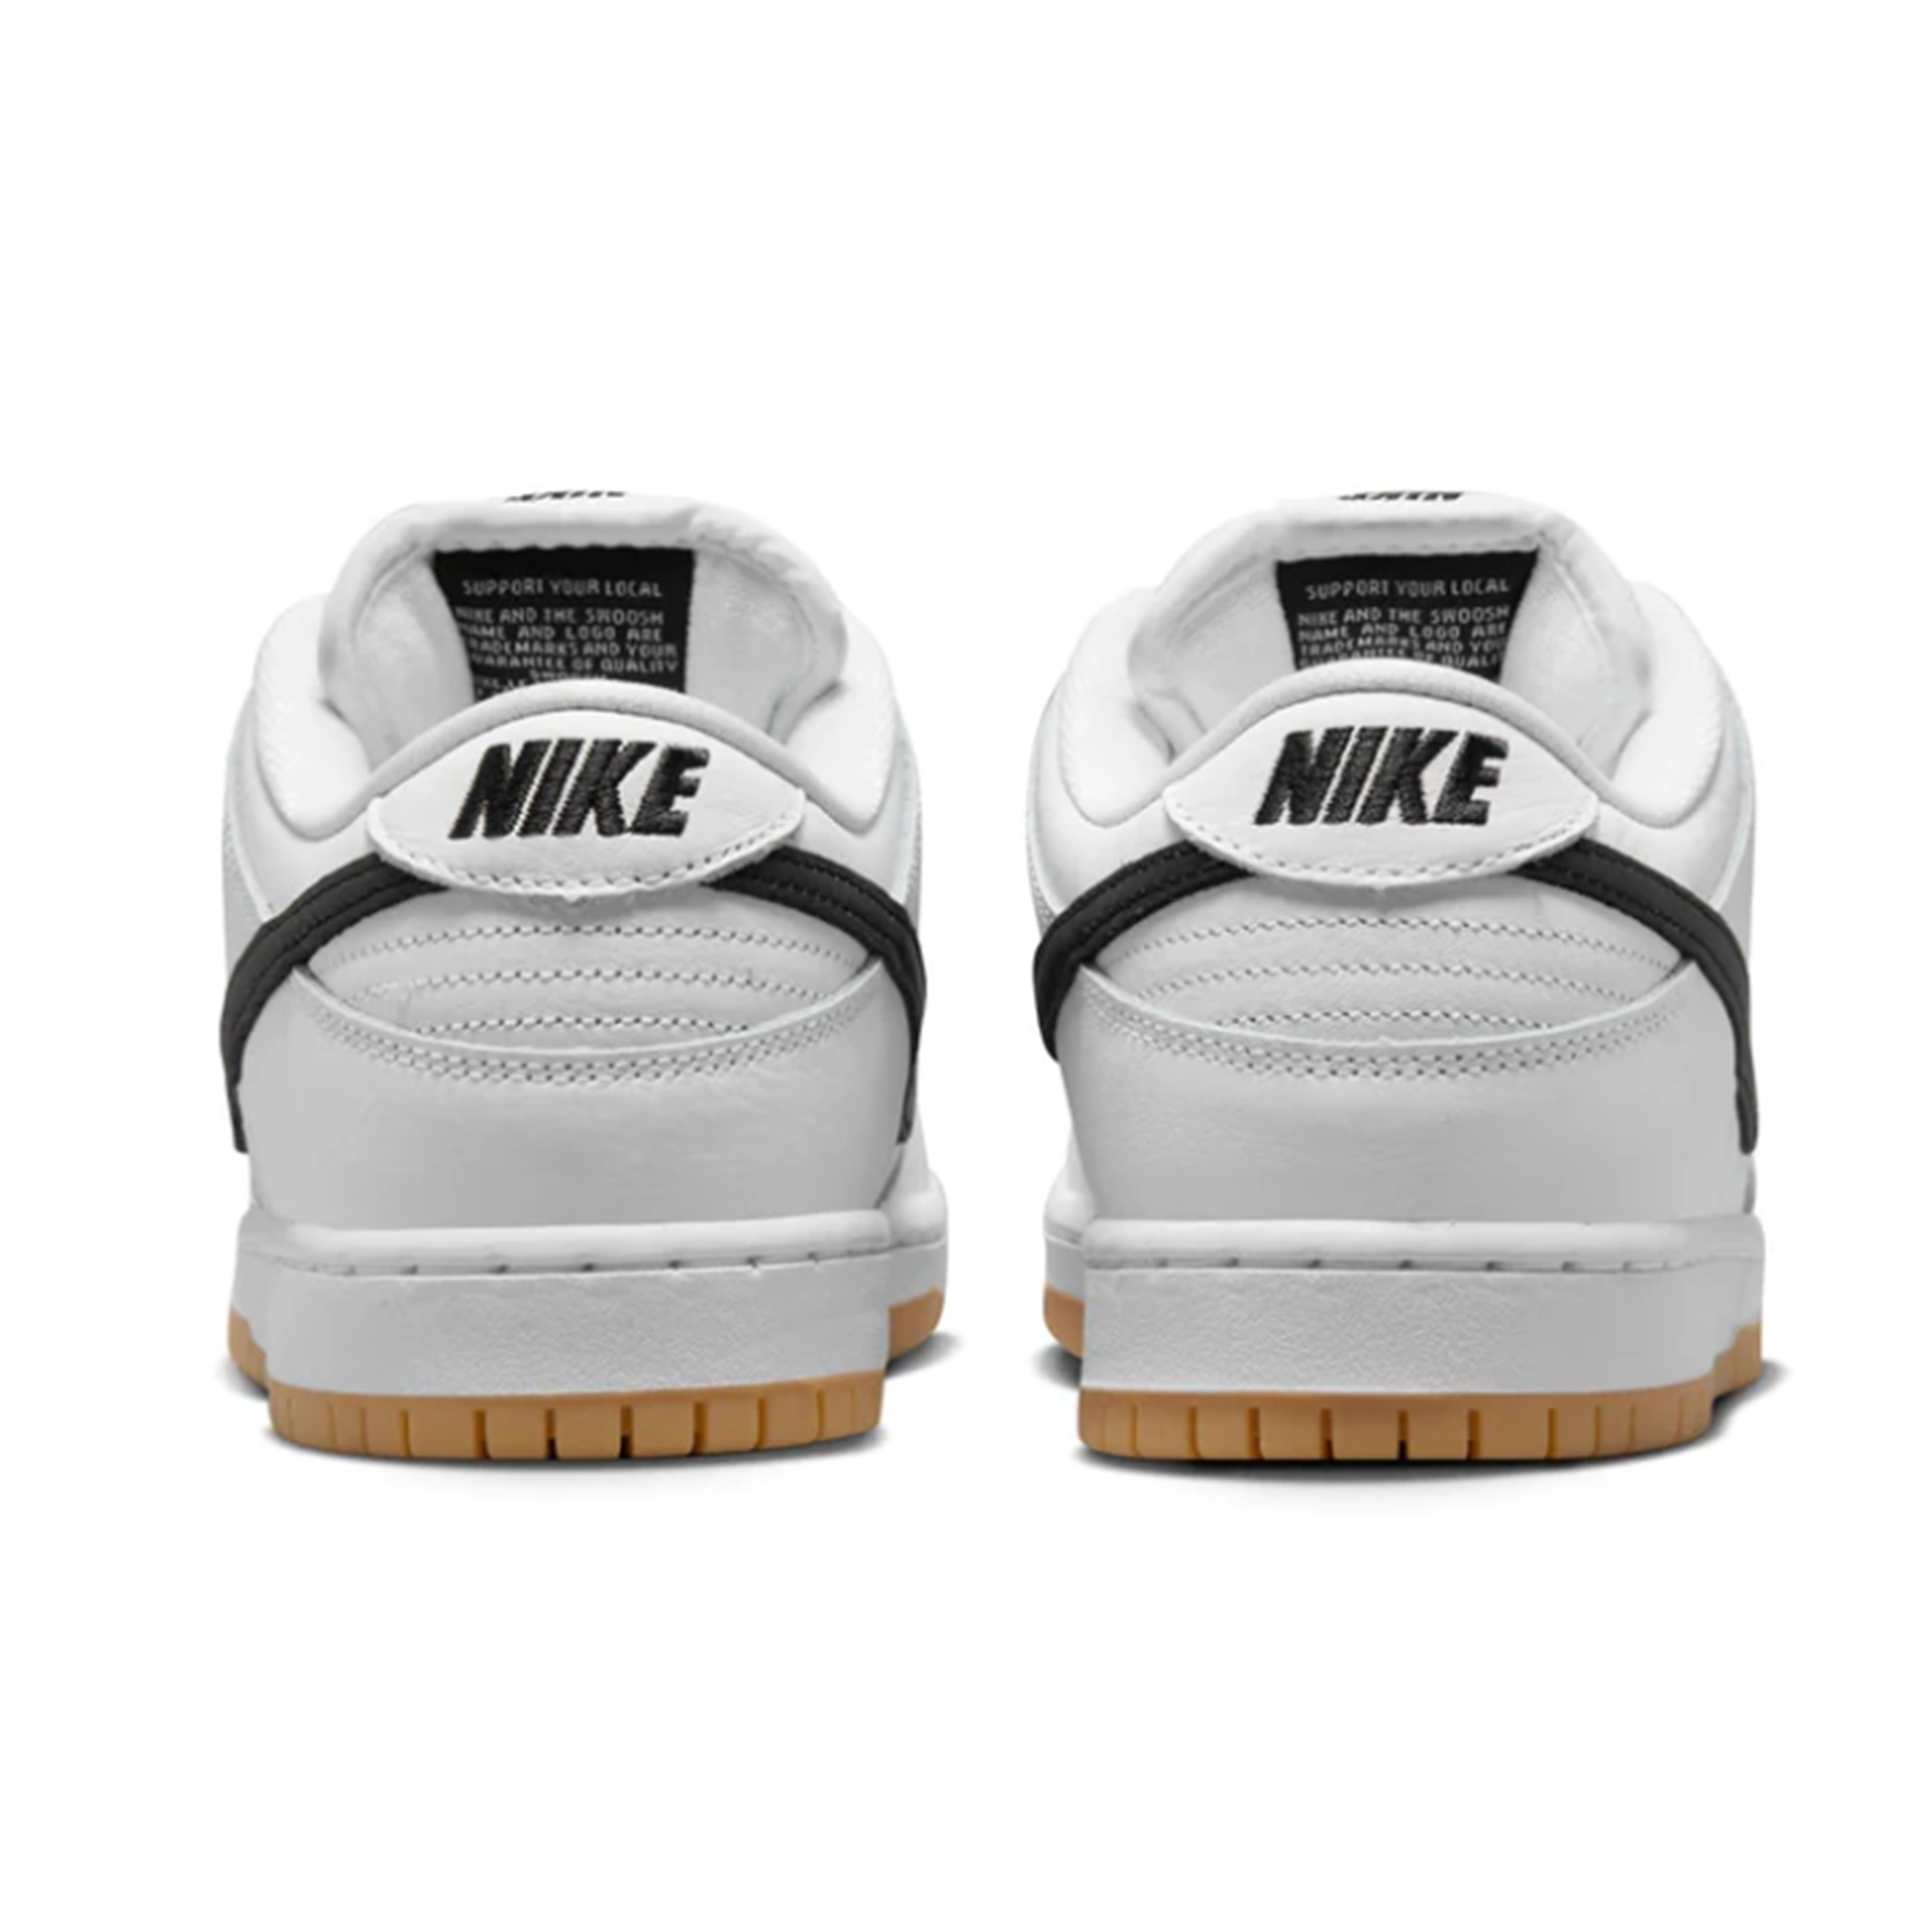 Nike SB Dunk Low Pro - "White Gum"